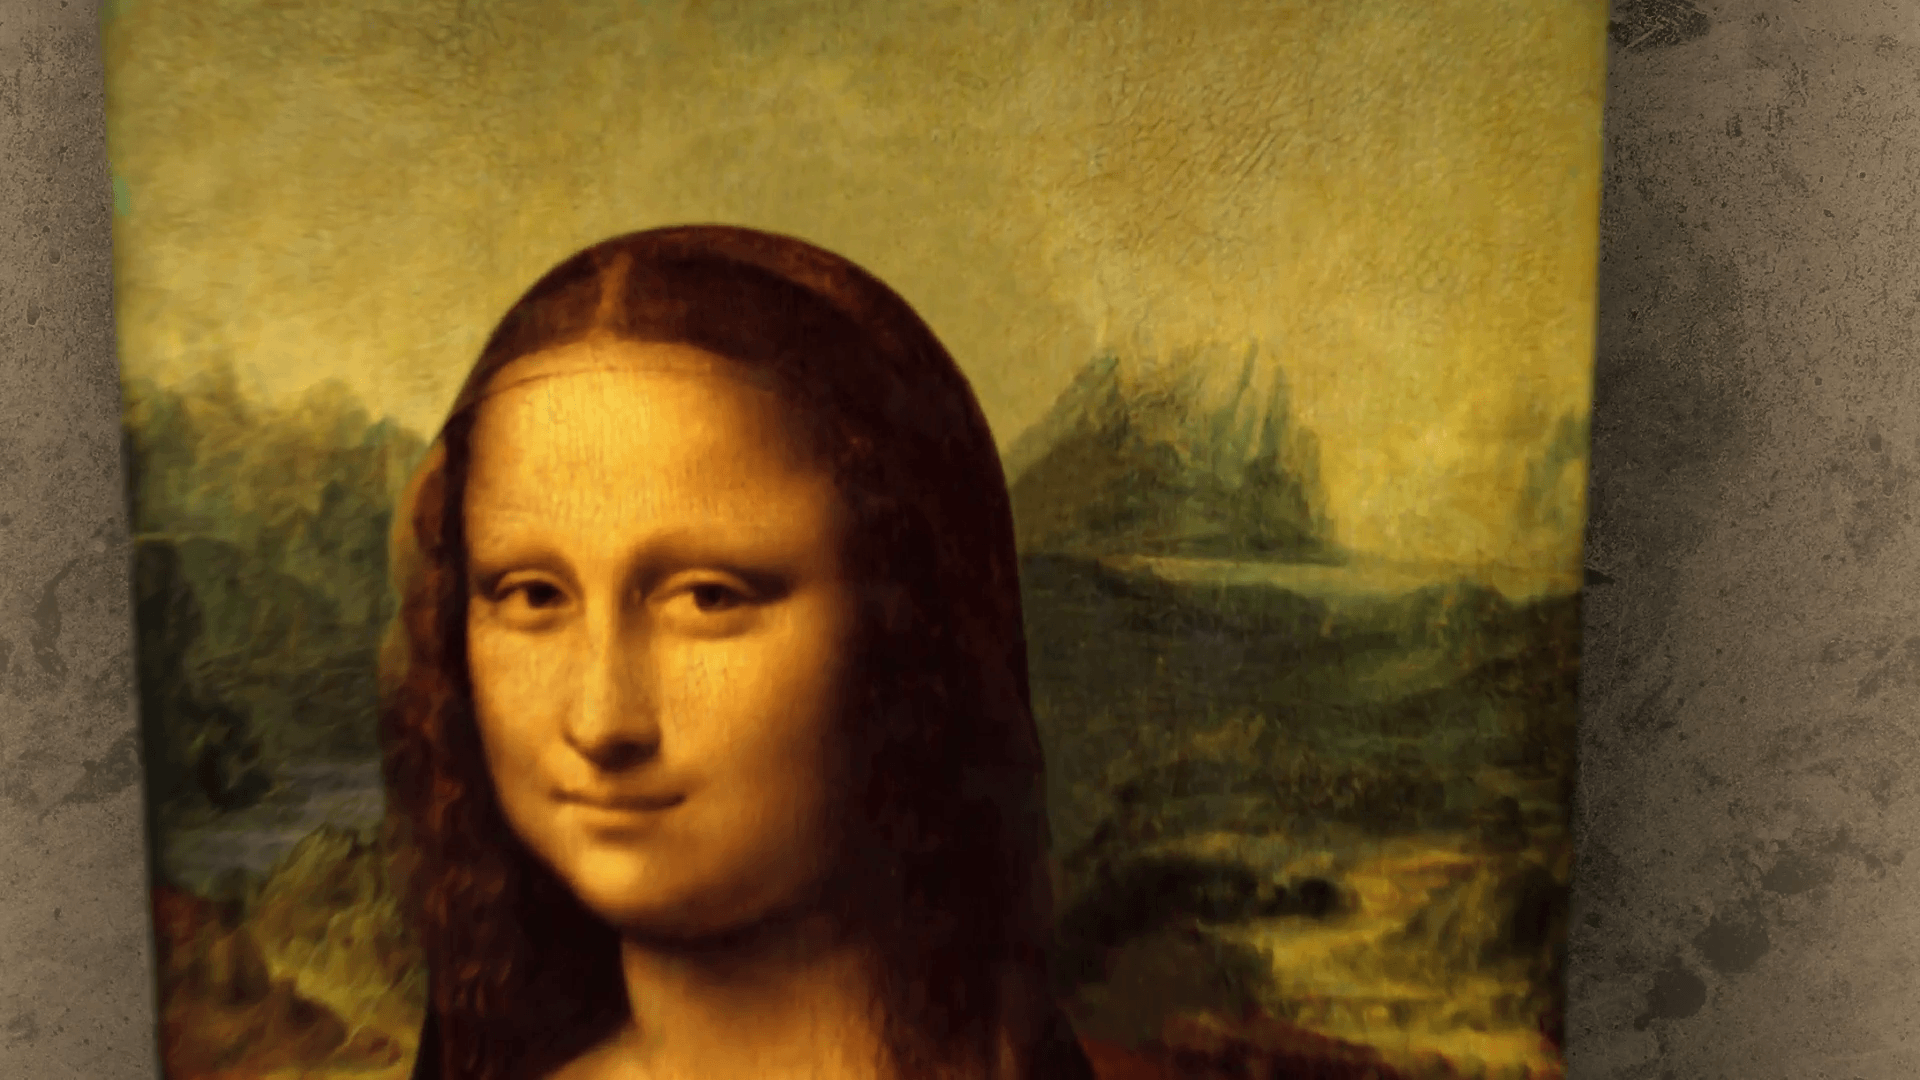 Mona Lisa smile, a funny animation of Leonardo Da Vinci's painting